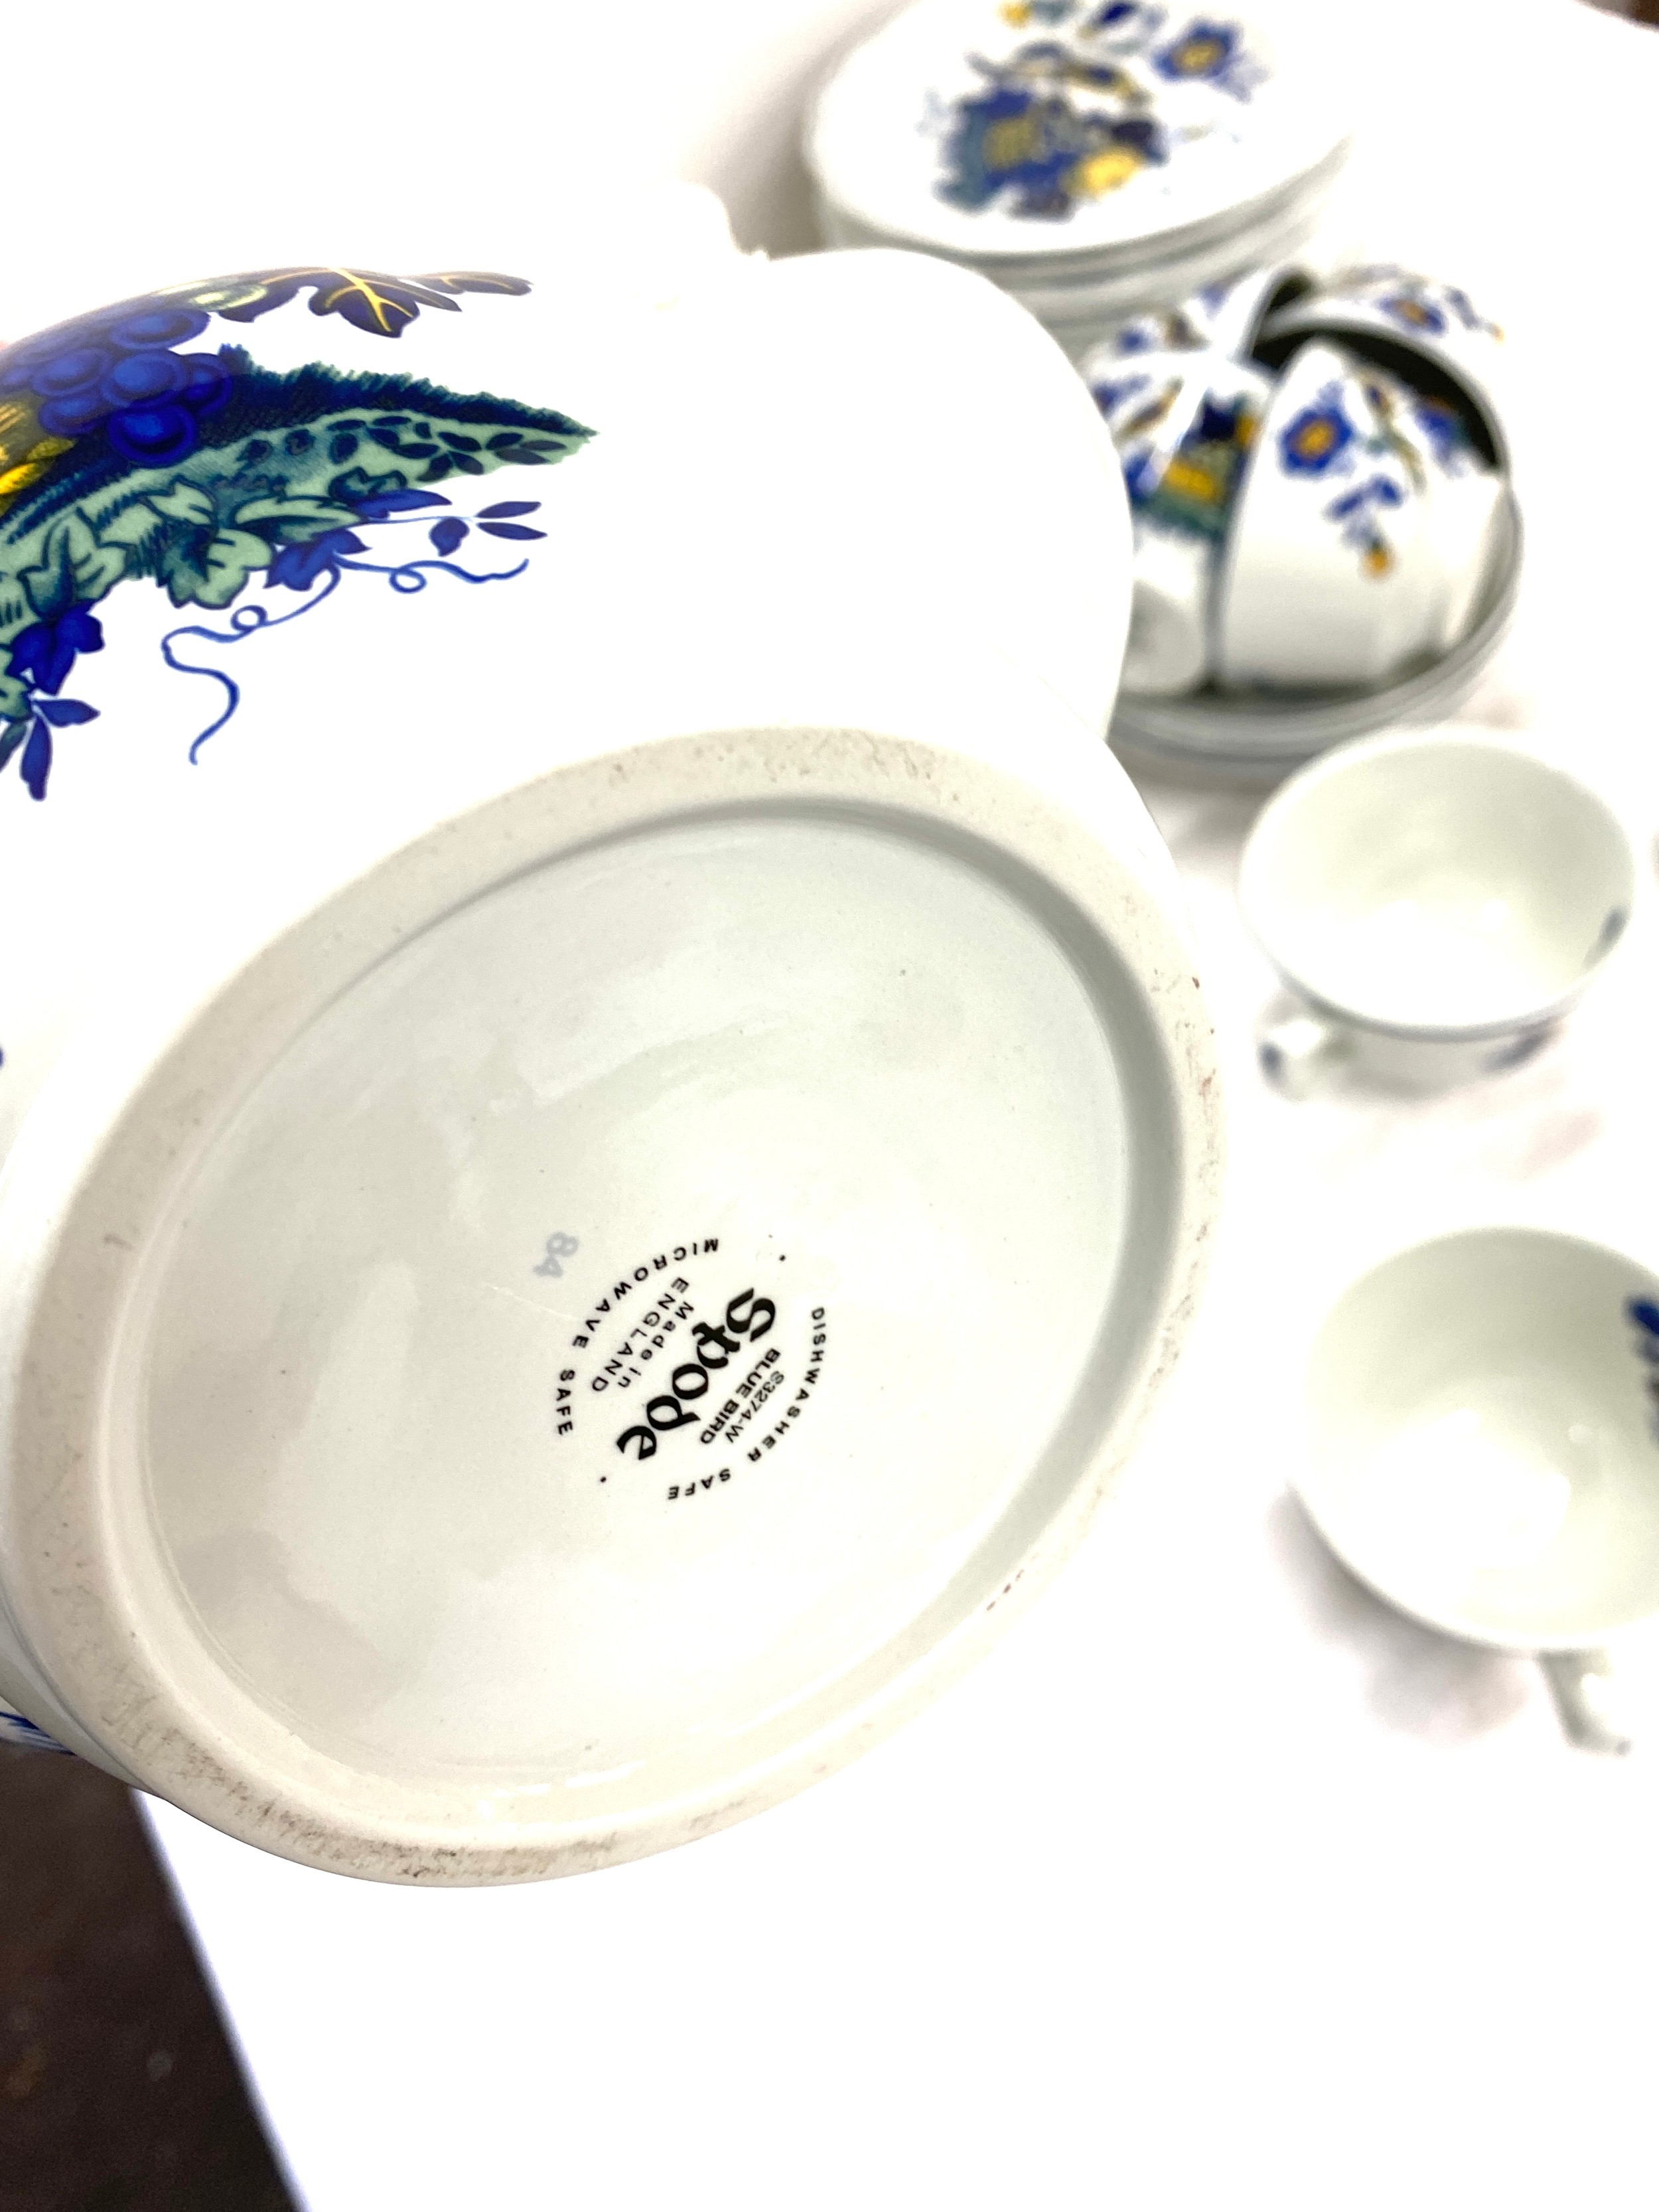 Spode Blue Bird s3274 c1838 - 12 cups 12 saucers 12 sandwich plates, milk jug, coffee pot - Image 4 of 5